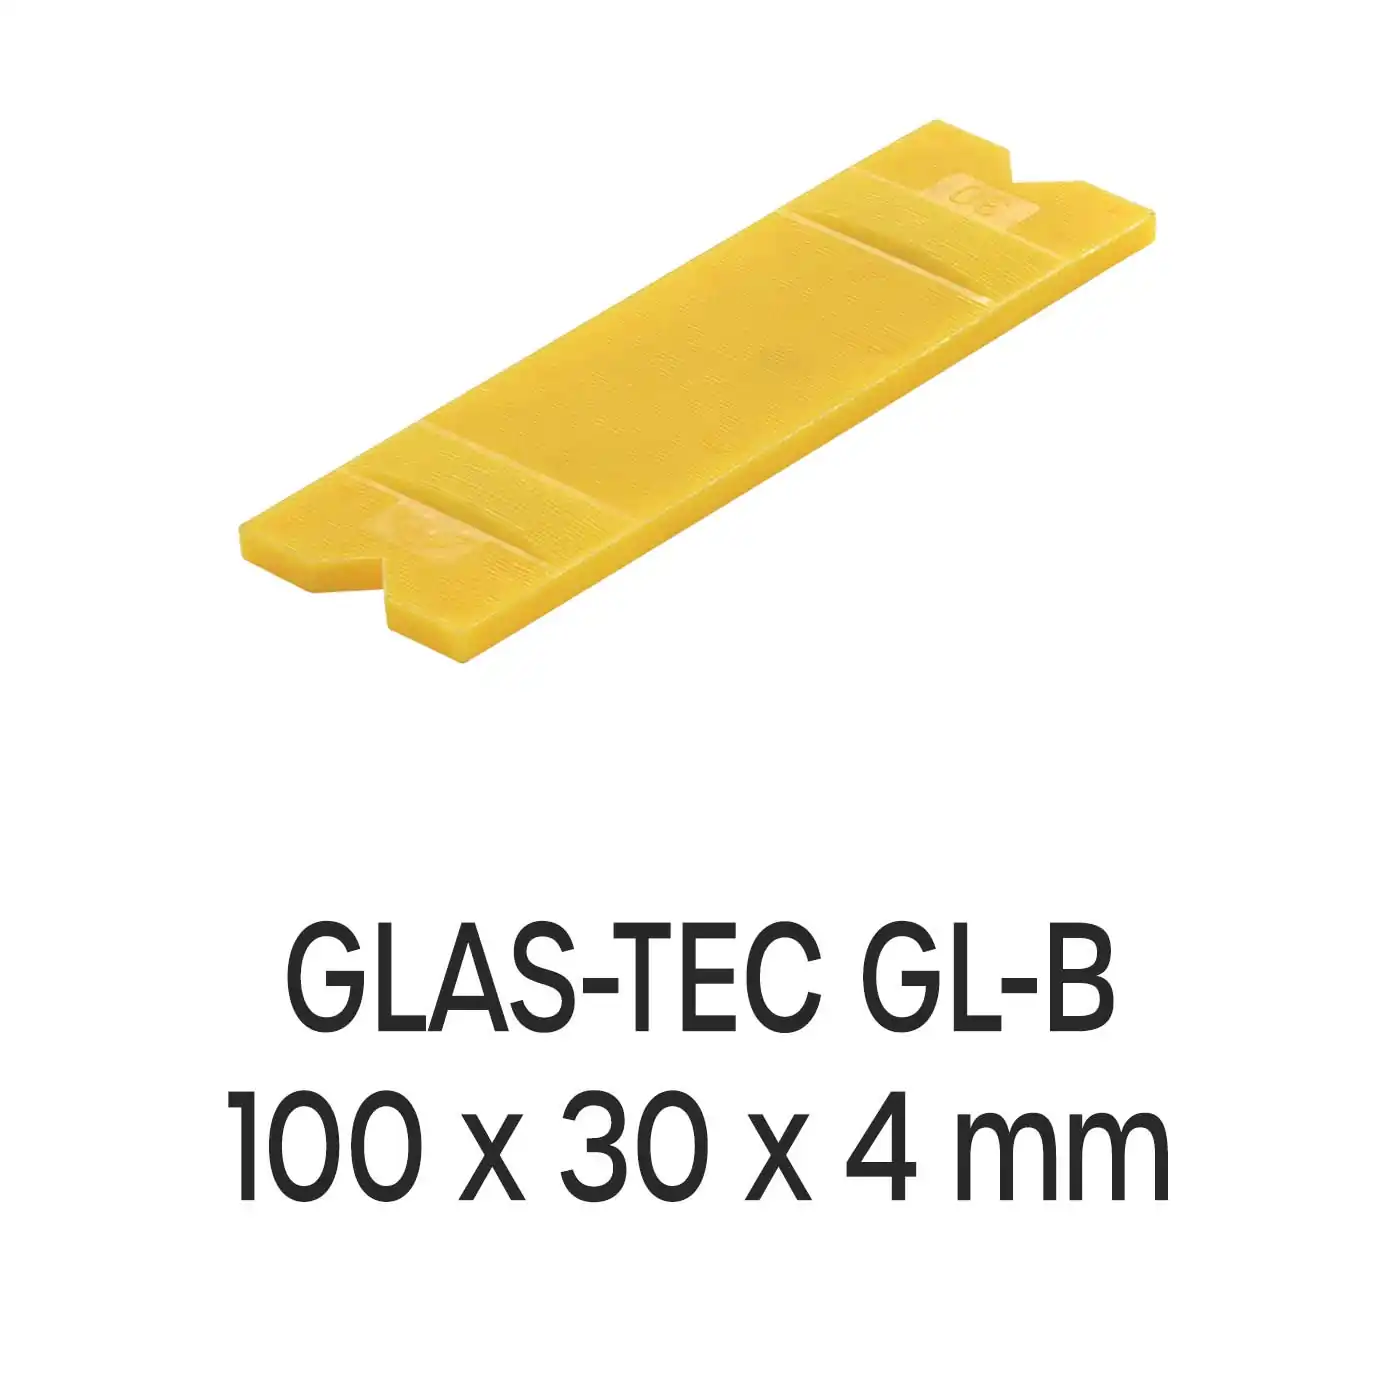 Roto GLAS-TEC GL-B 100 x 30 x 4 mm Verglasungsklötze 1000 Stück